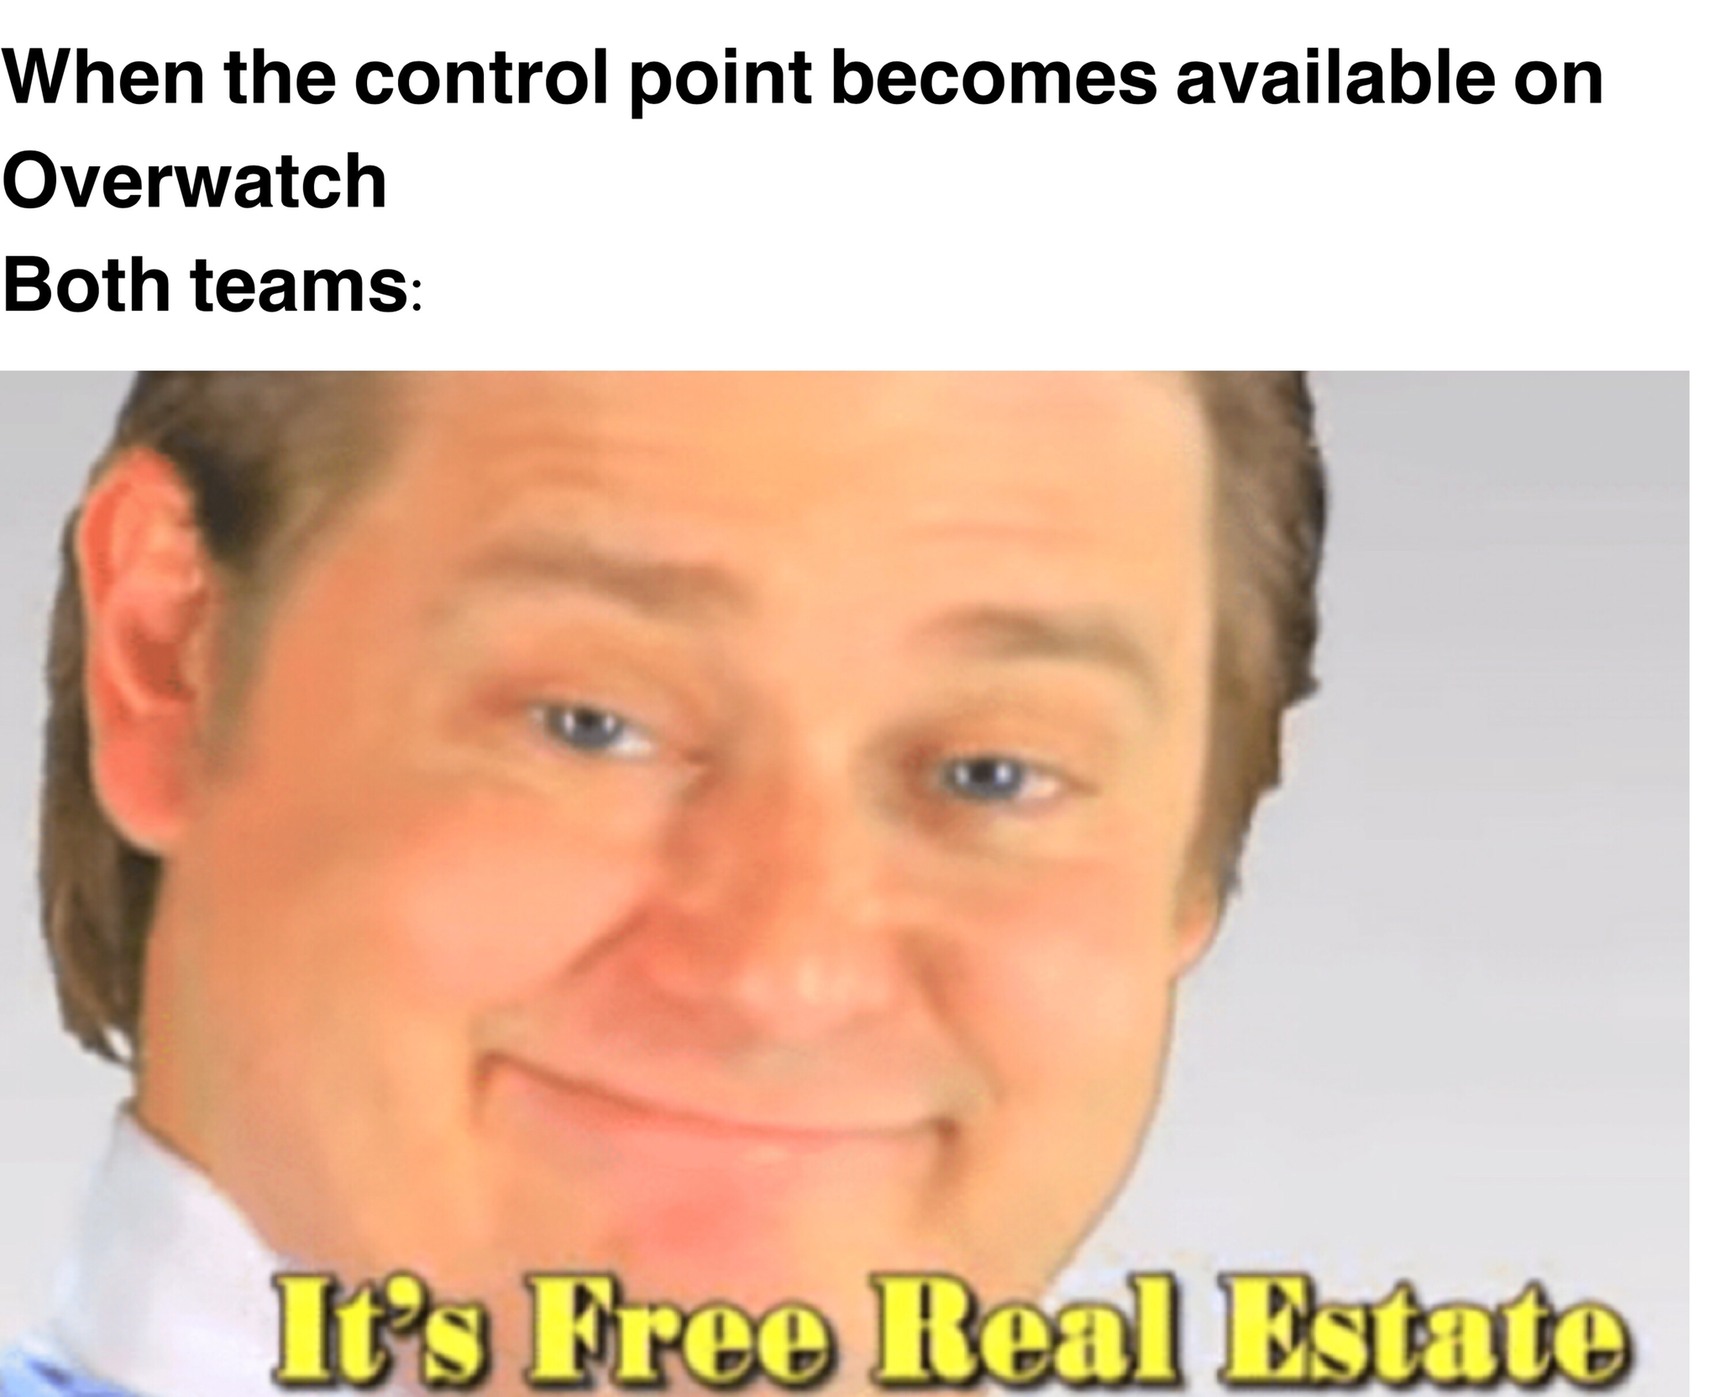 it’s free real estate - meme